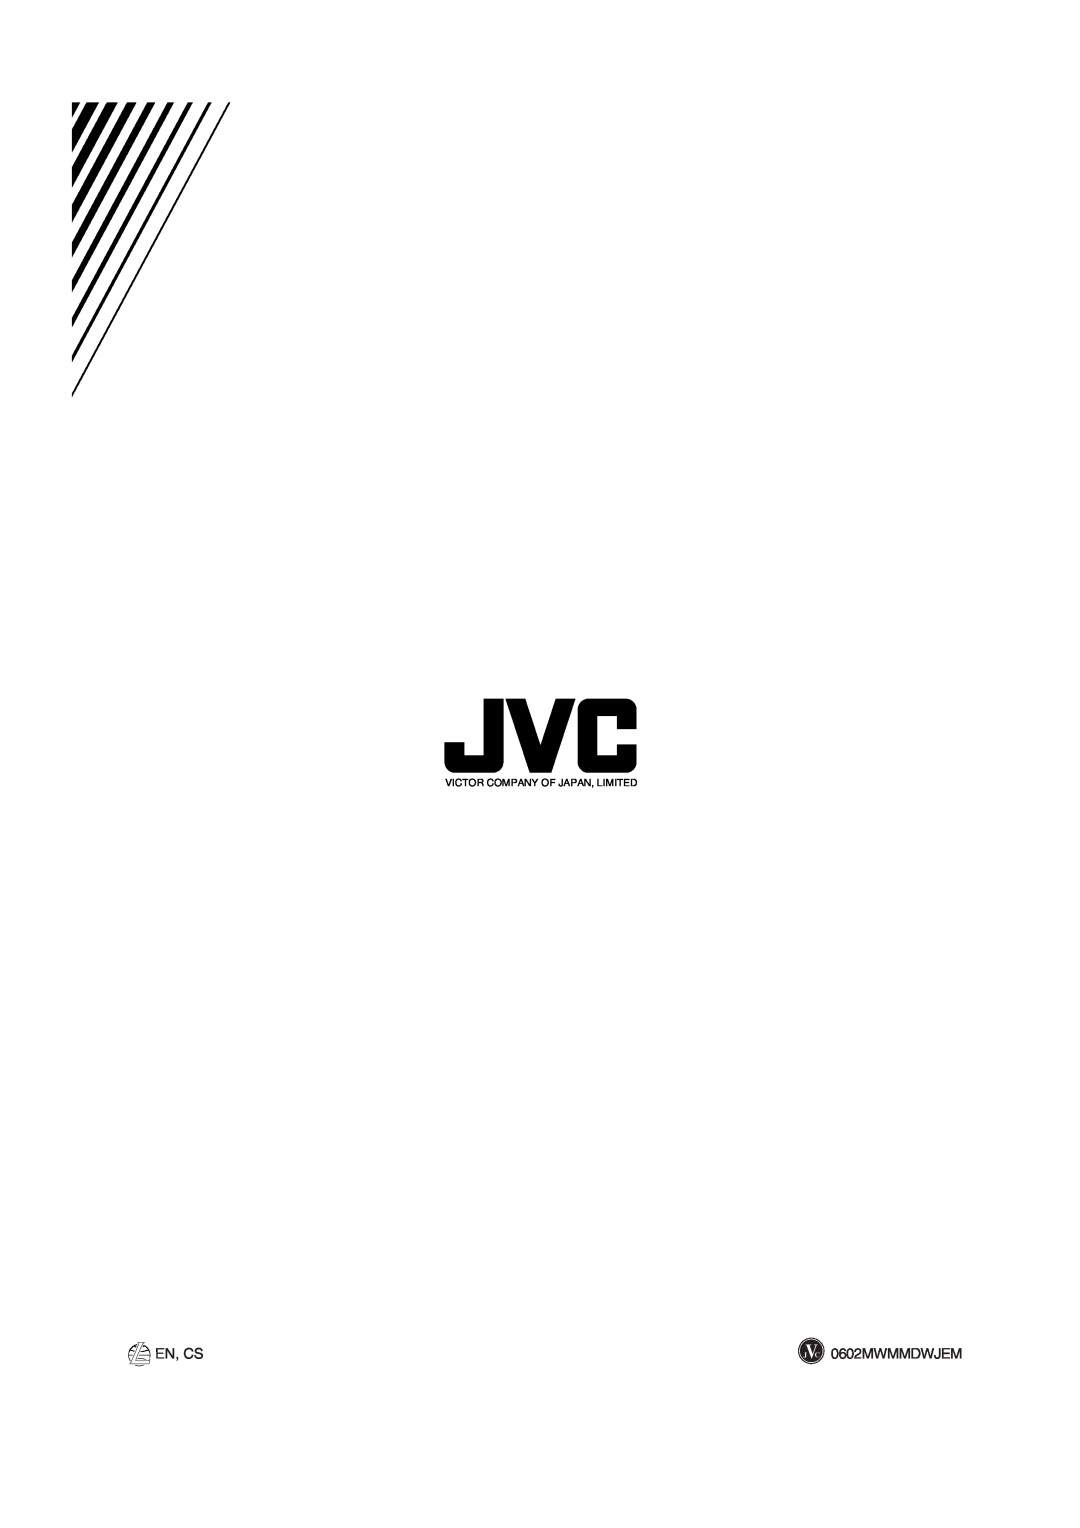 JVC LVT0900-004A, CA-UXZ7MD manual En, Cs, 0602MWMMDWJEM, Victor Company Of Japan, Limited 